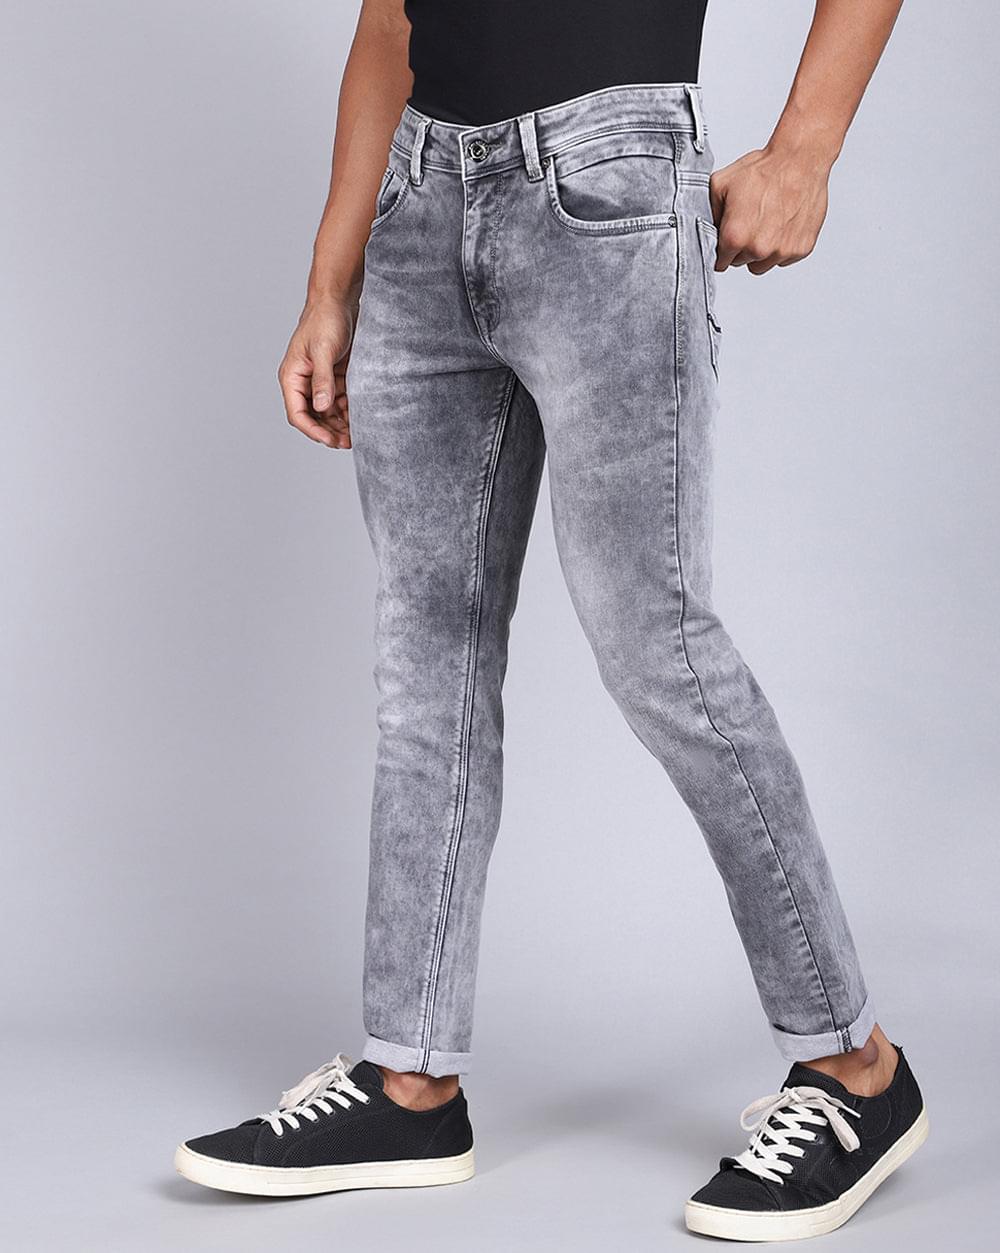 545 Light Grey Men Denim Jeans, Gender : Male, Waist Size : 28 Inch, 30  Inch, 32 Inch, 34 Inch, 36 Inch at Rs 1,599 / Piece in Delhi